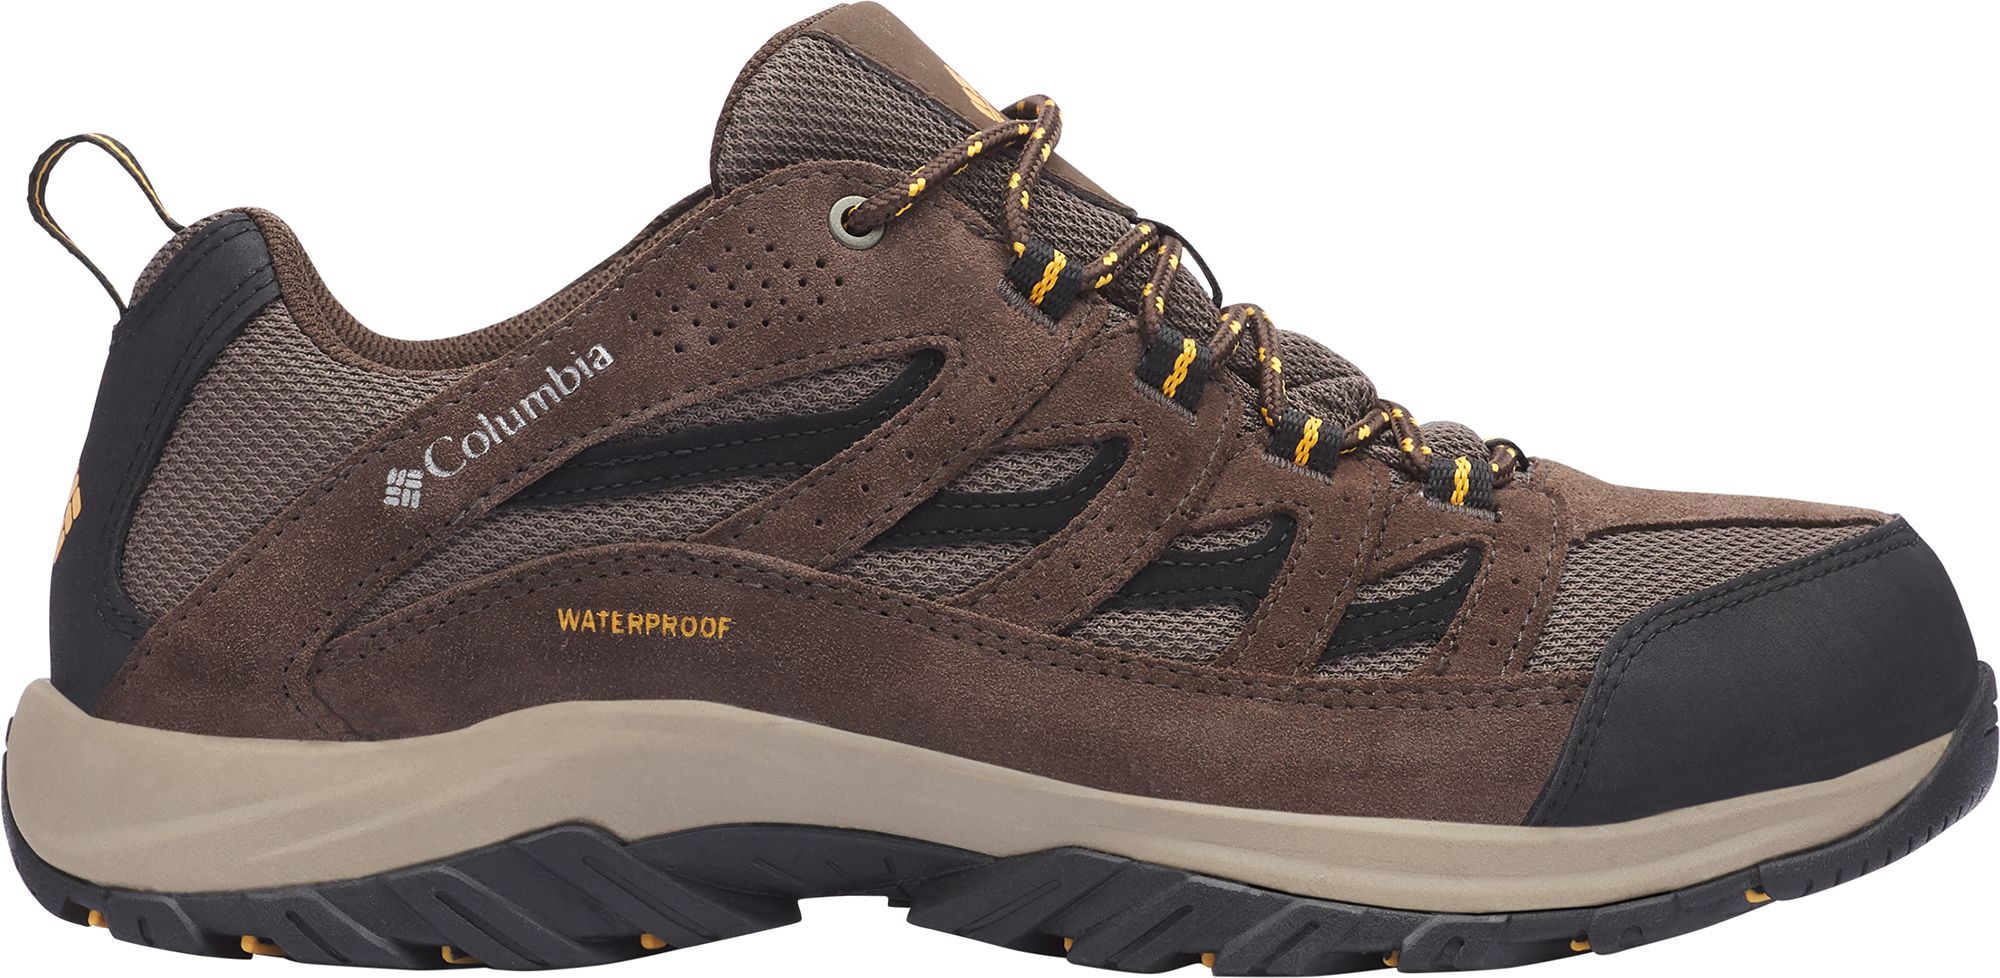 Crestwood Waterproof Hiking Shoes 